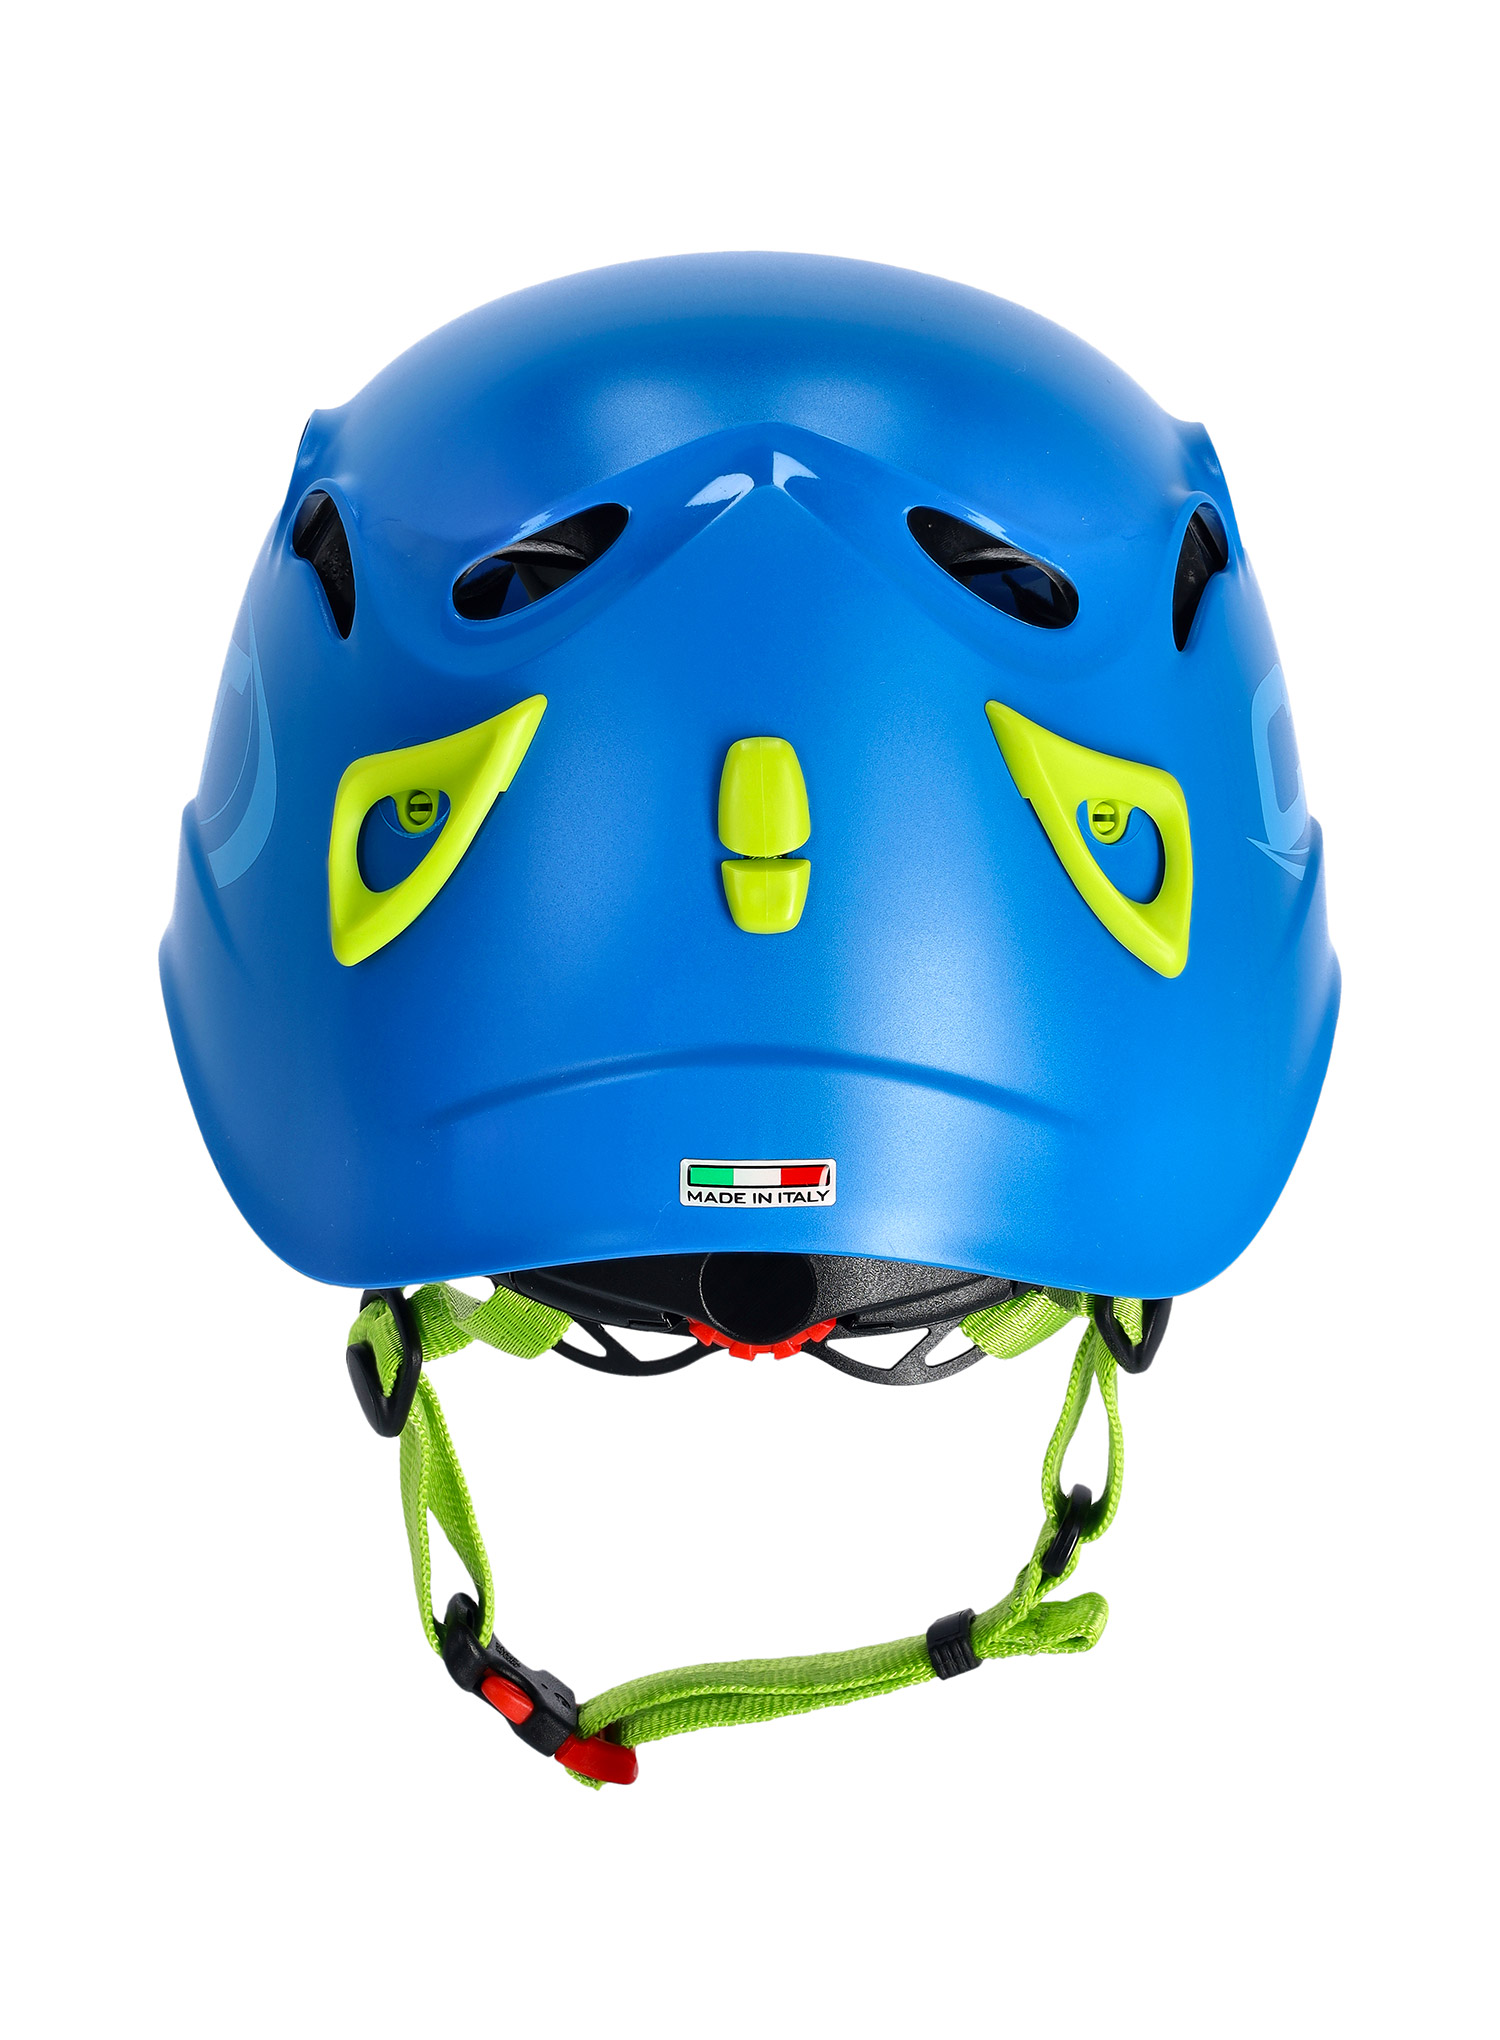 Unisex Adult Helmet Climbing Technology Galaxy 